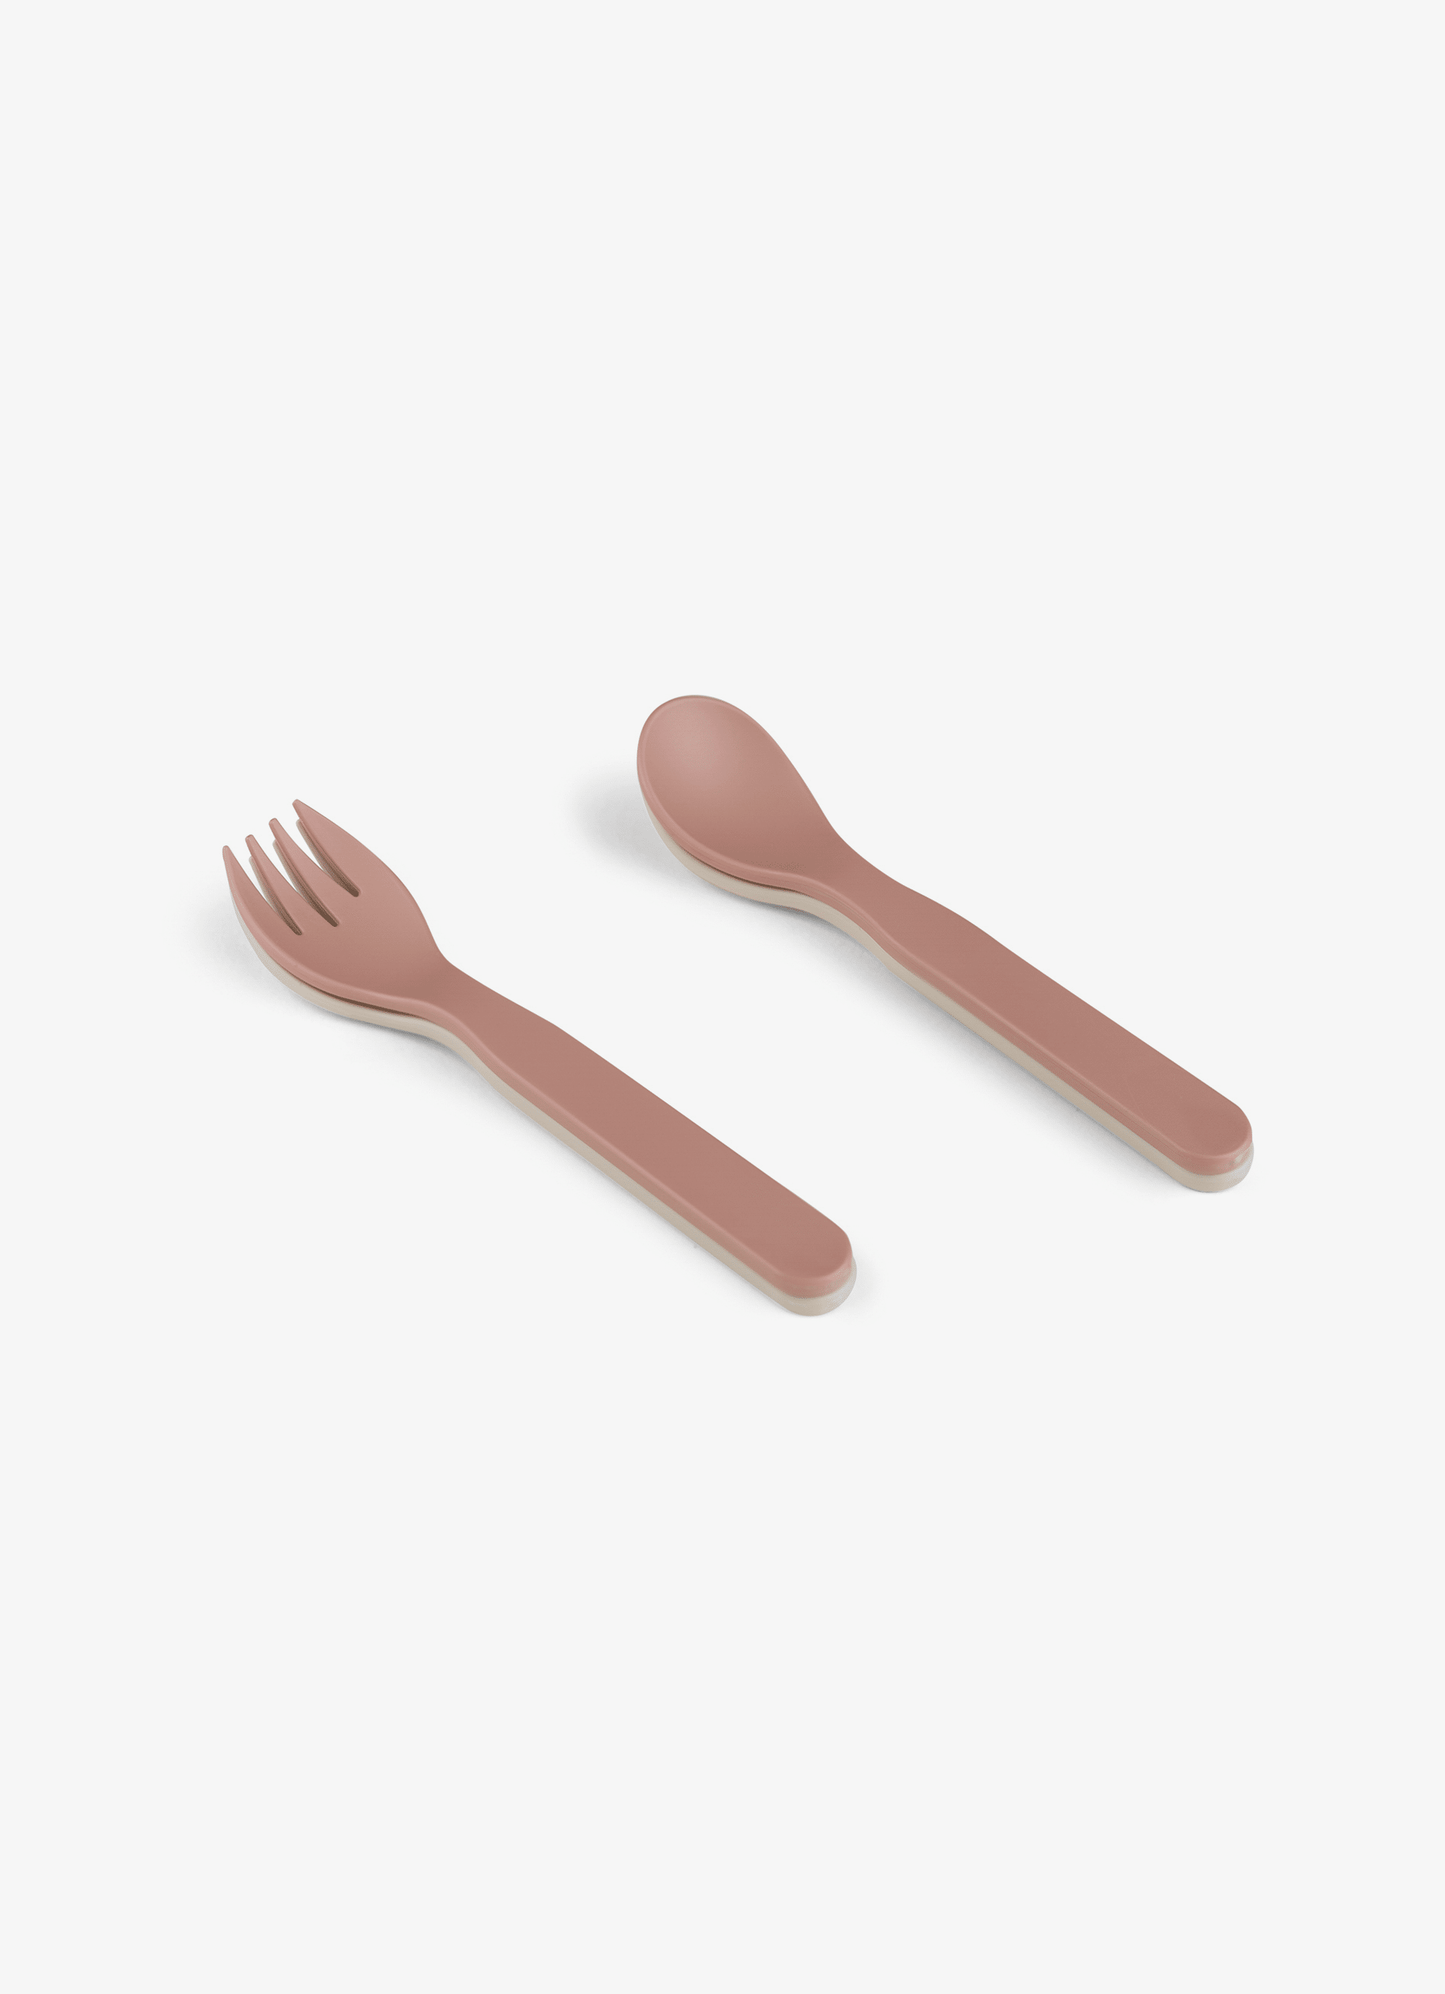 Bio-Based Cutlery - set of 5 - Pink/ Cream + Case